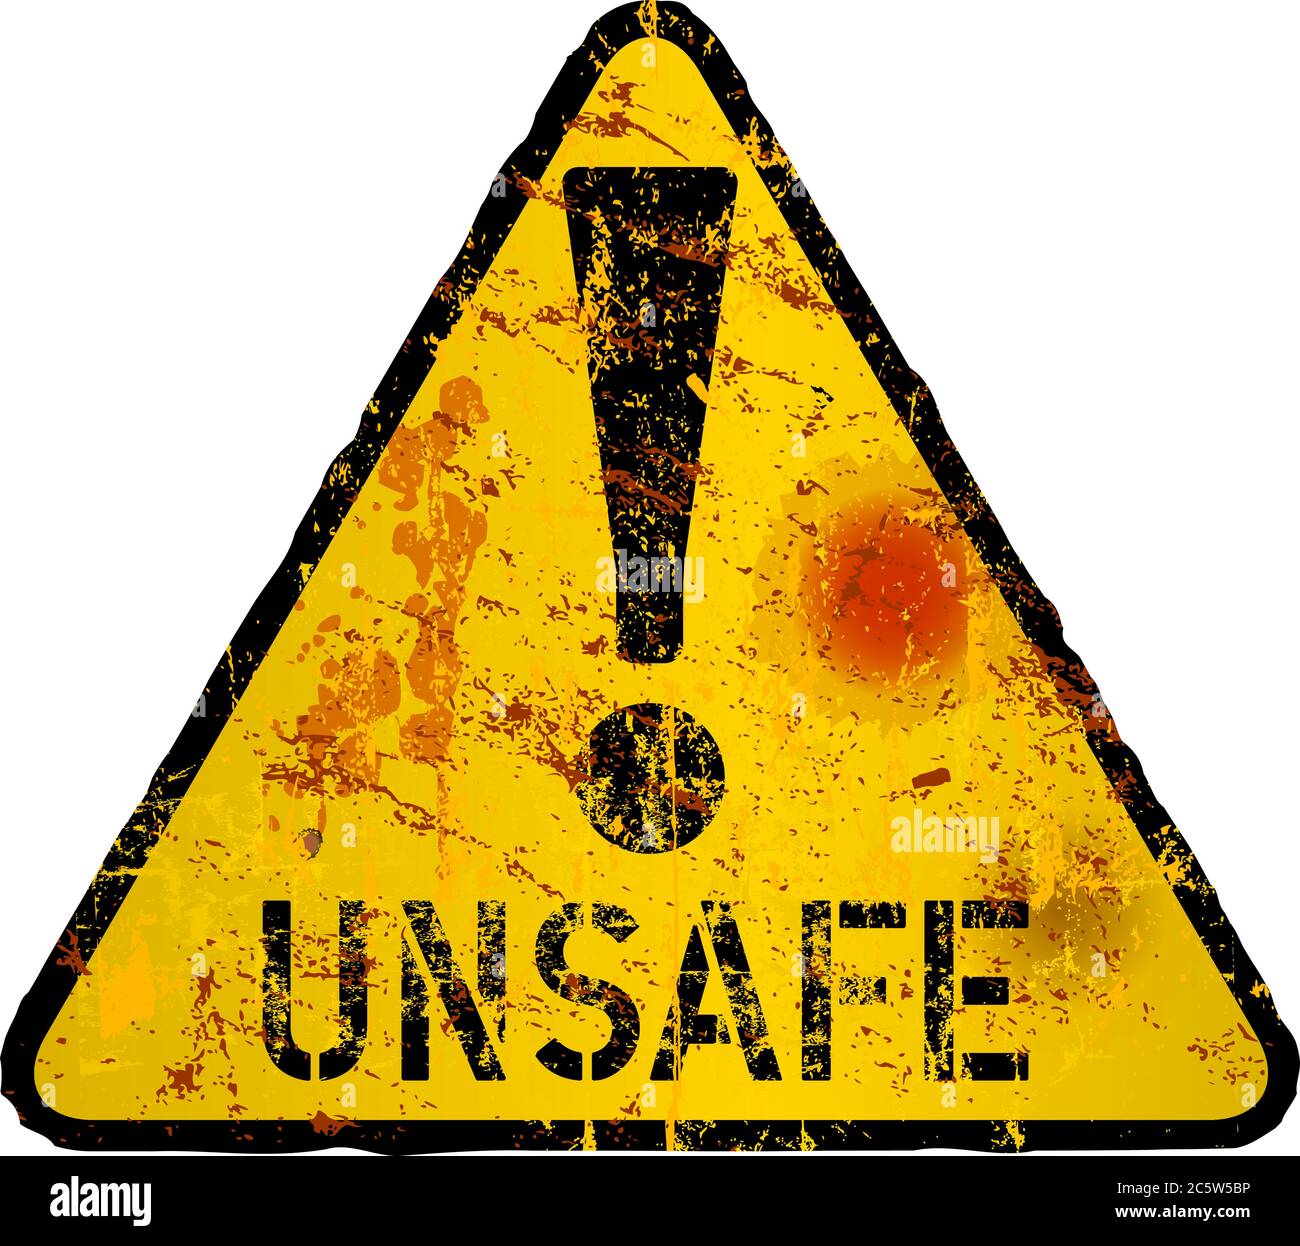 https://c8.alamy.com/comp/2C5W5BP/unsafe-and-danger-computer-virus-warning-sign-worn-and-grugy-vector-illustration-2C5W5BP.jpg